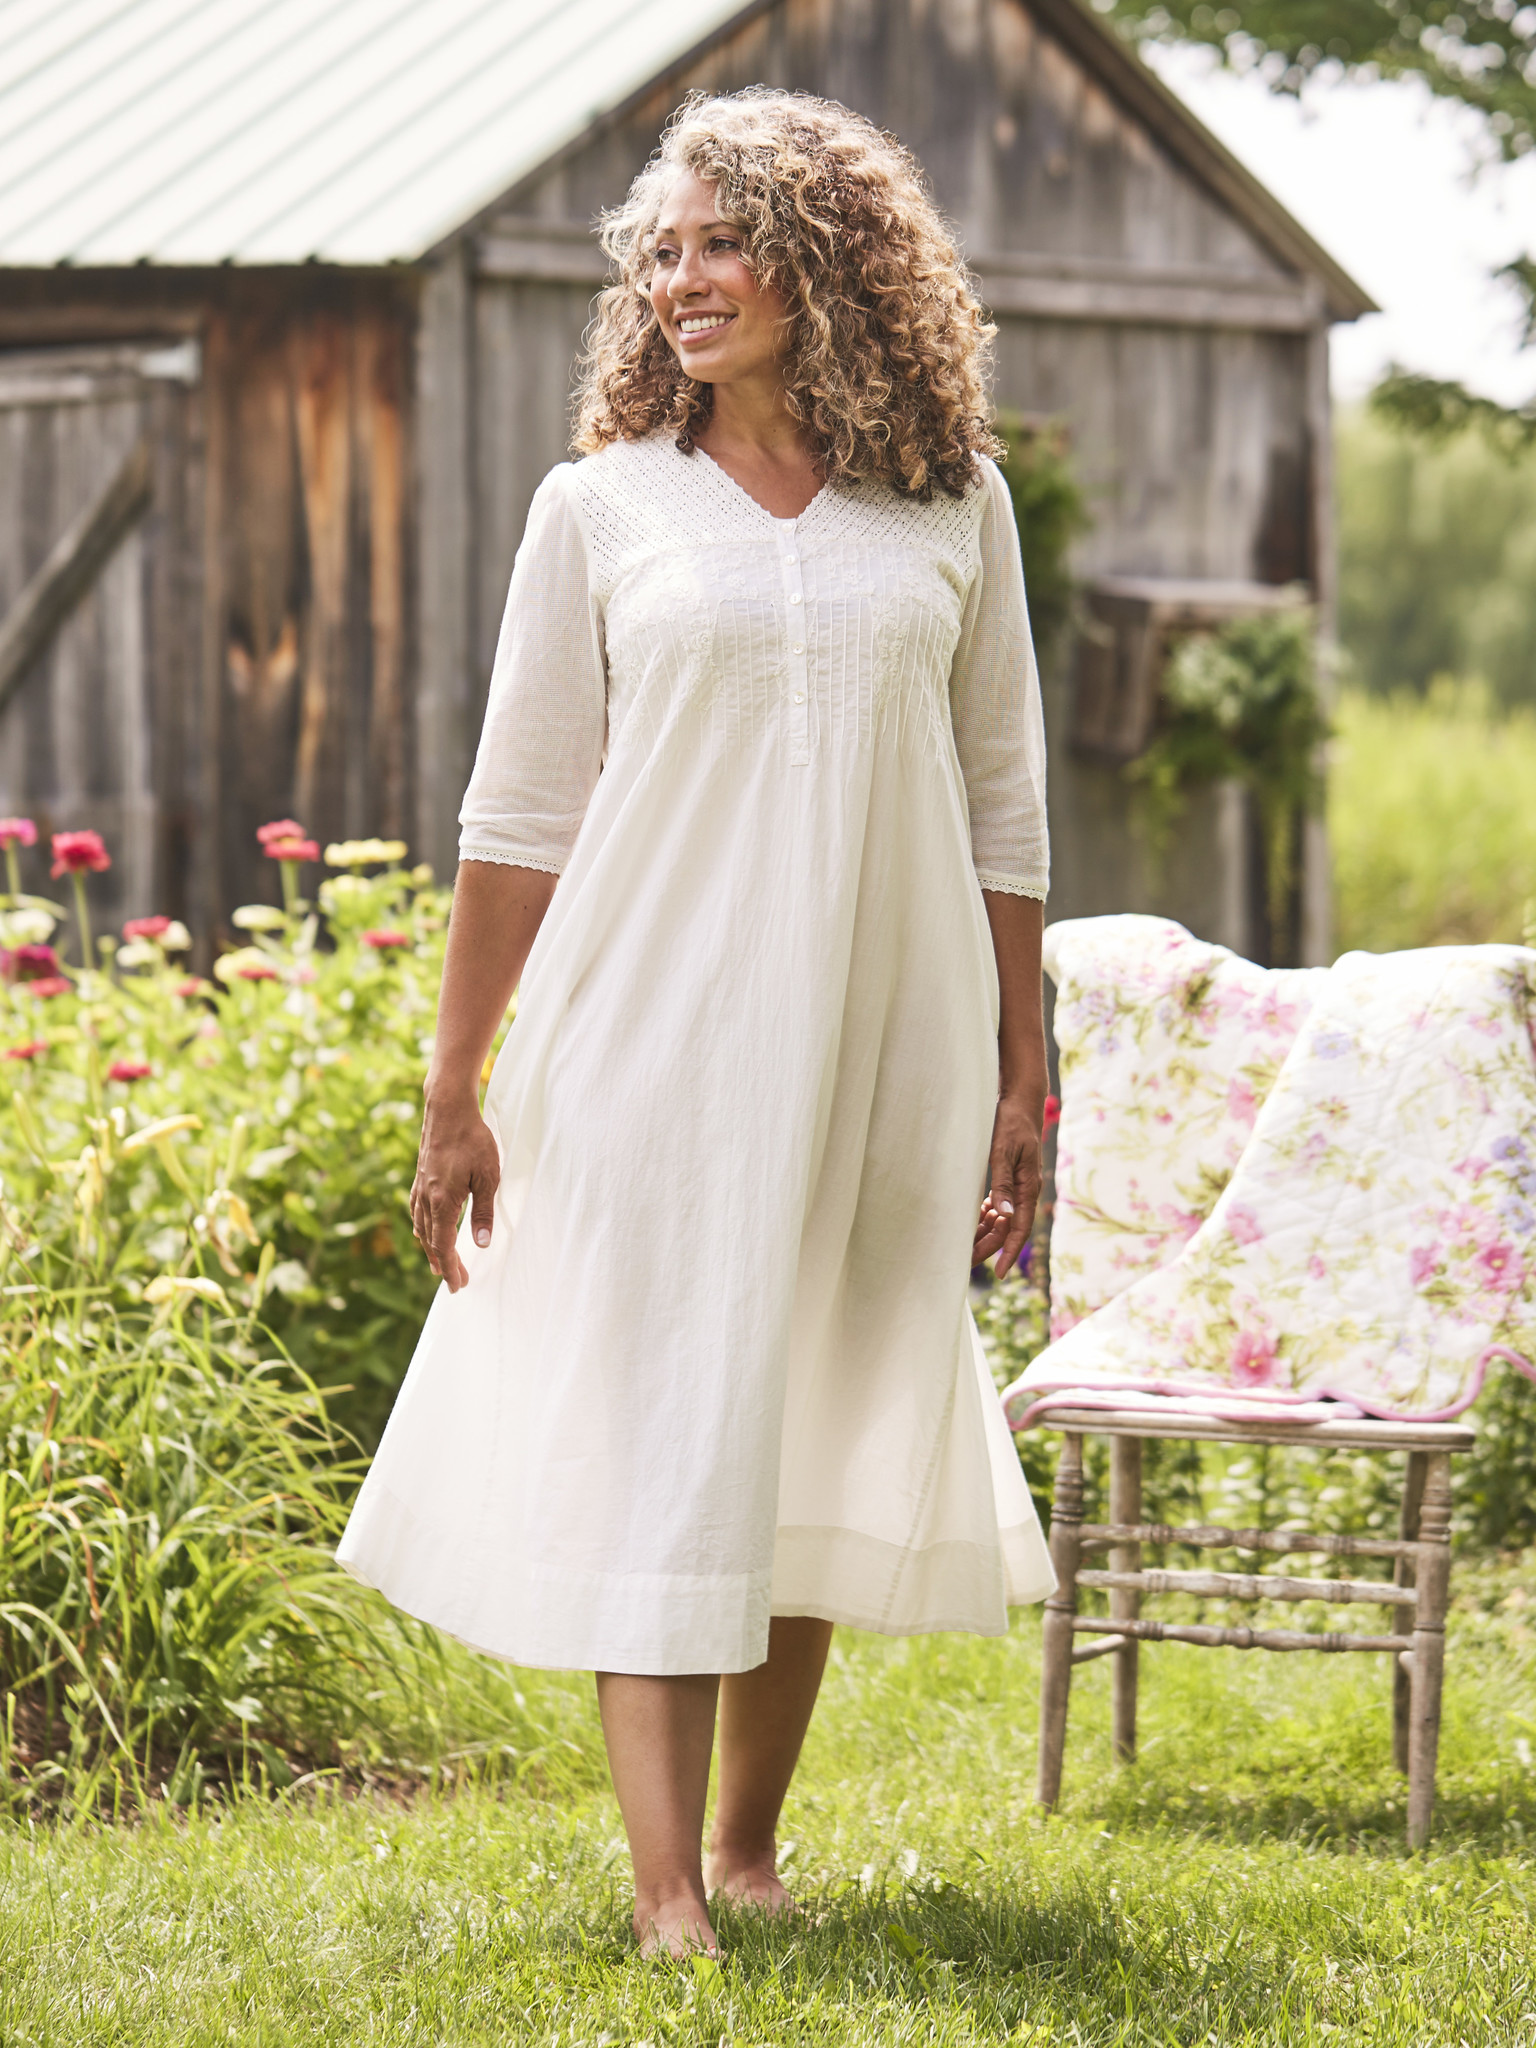 Crochet Dress PATTERN Pima Cotton Dress sizes up to 6 Years english Only -   Canada